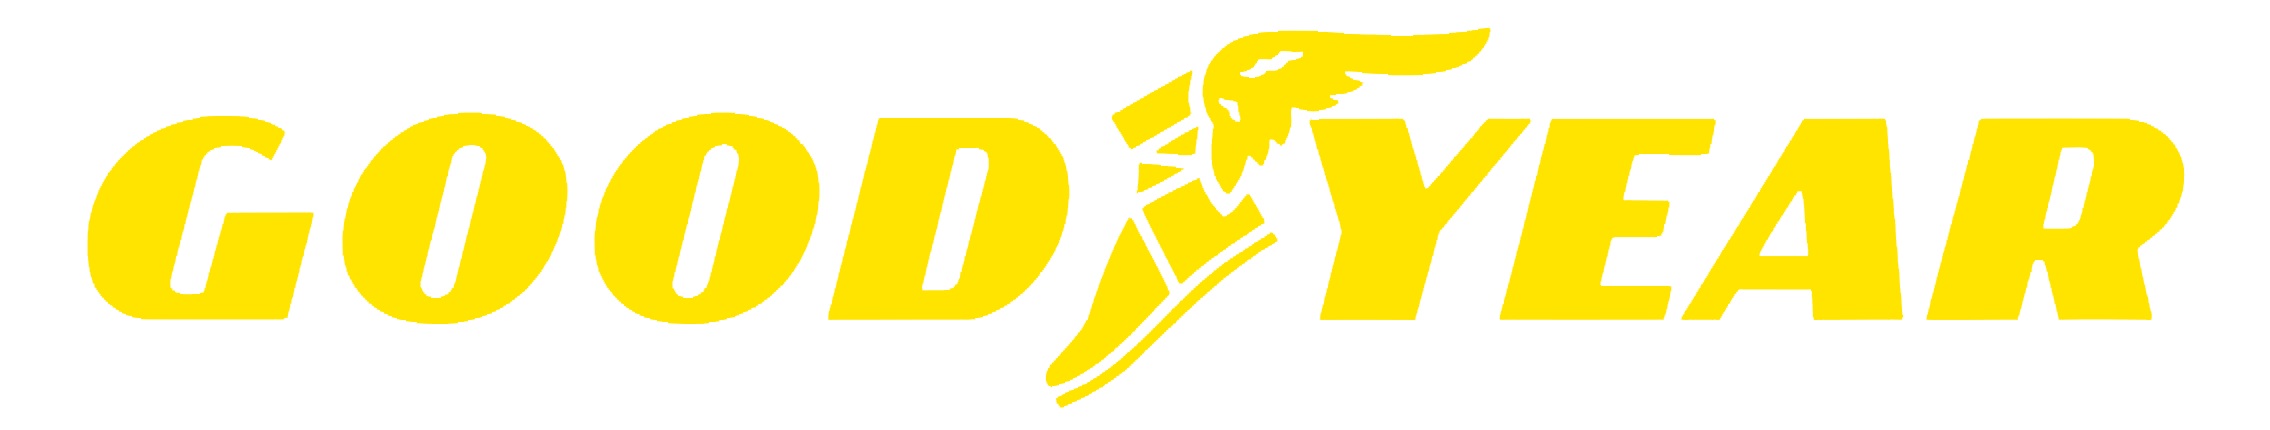 Good-Year-Logo-1 copy.png